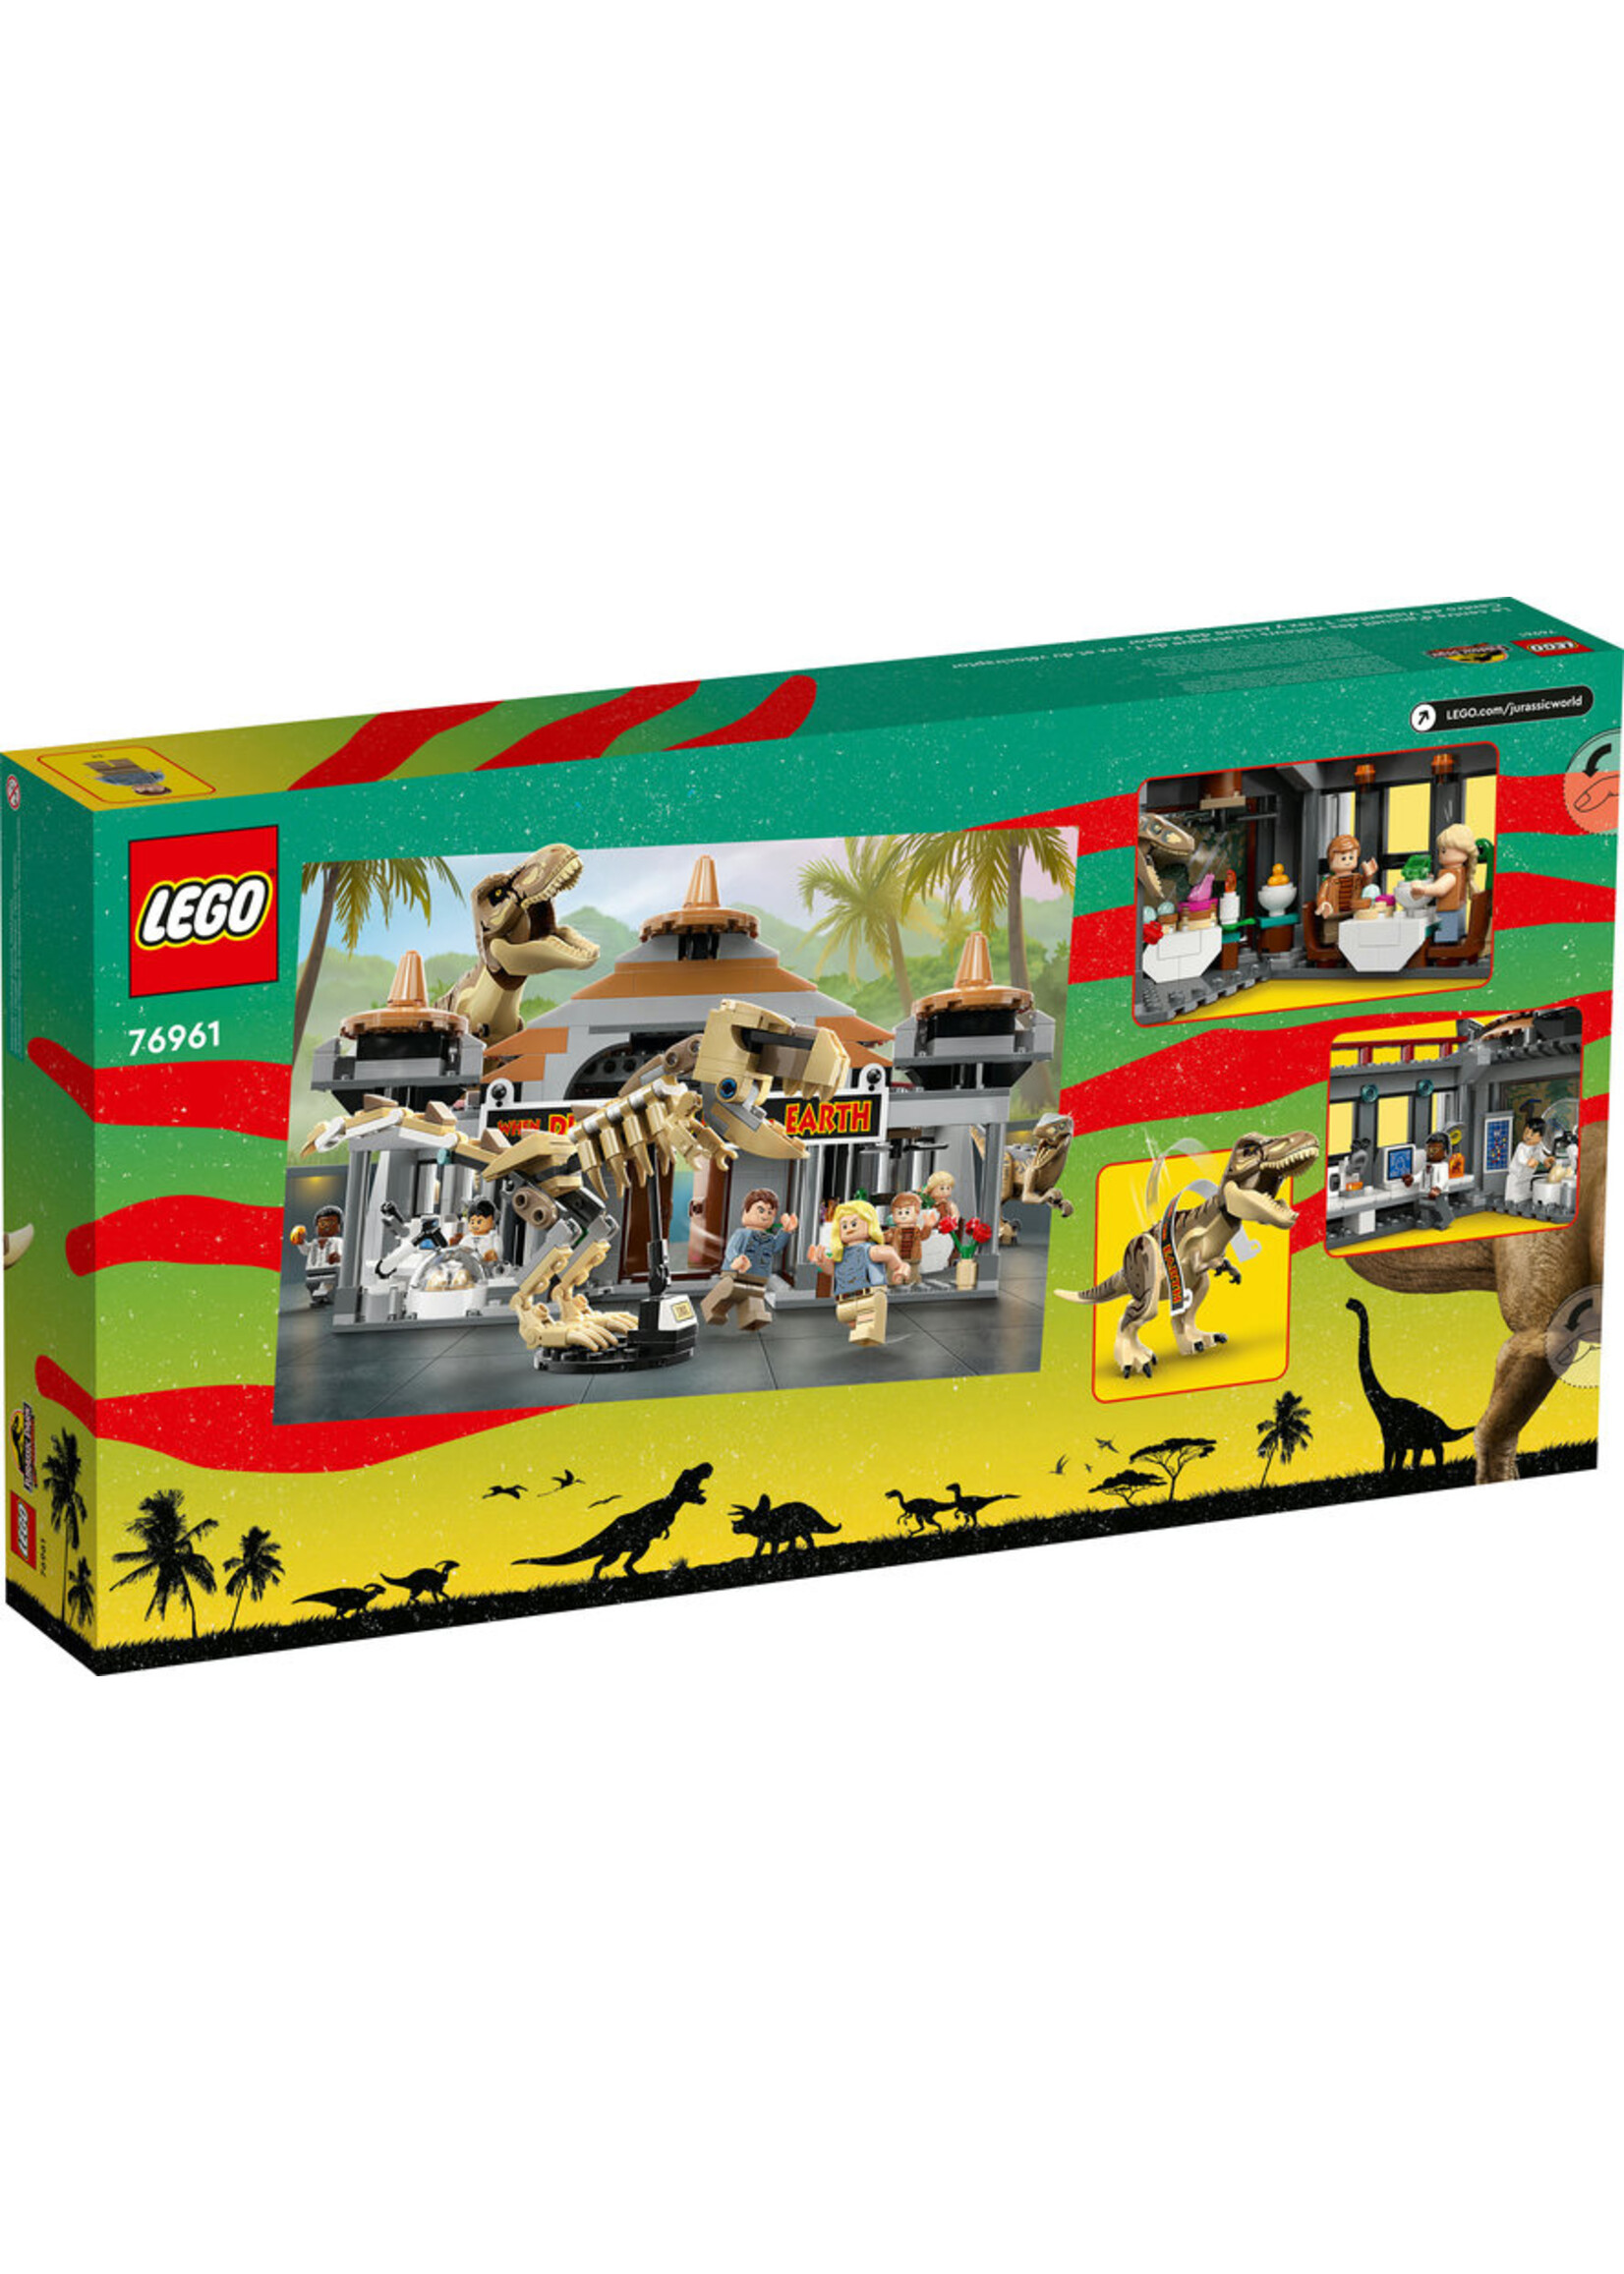 LEGO 76961 - Visitor Center: T.rex & Raptor Attack